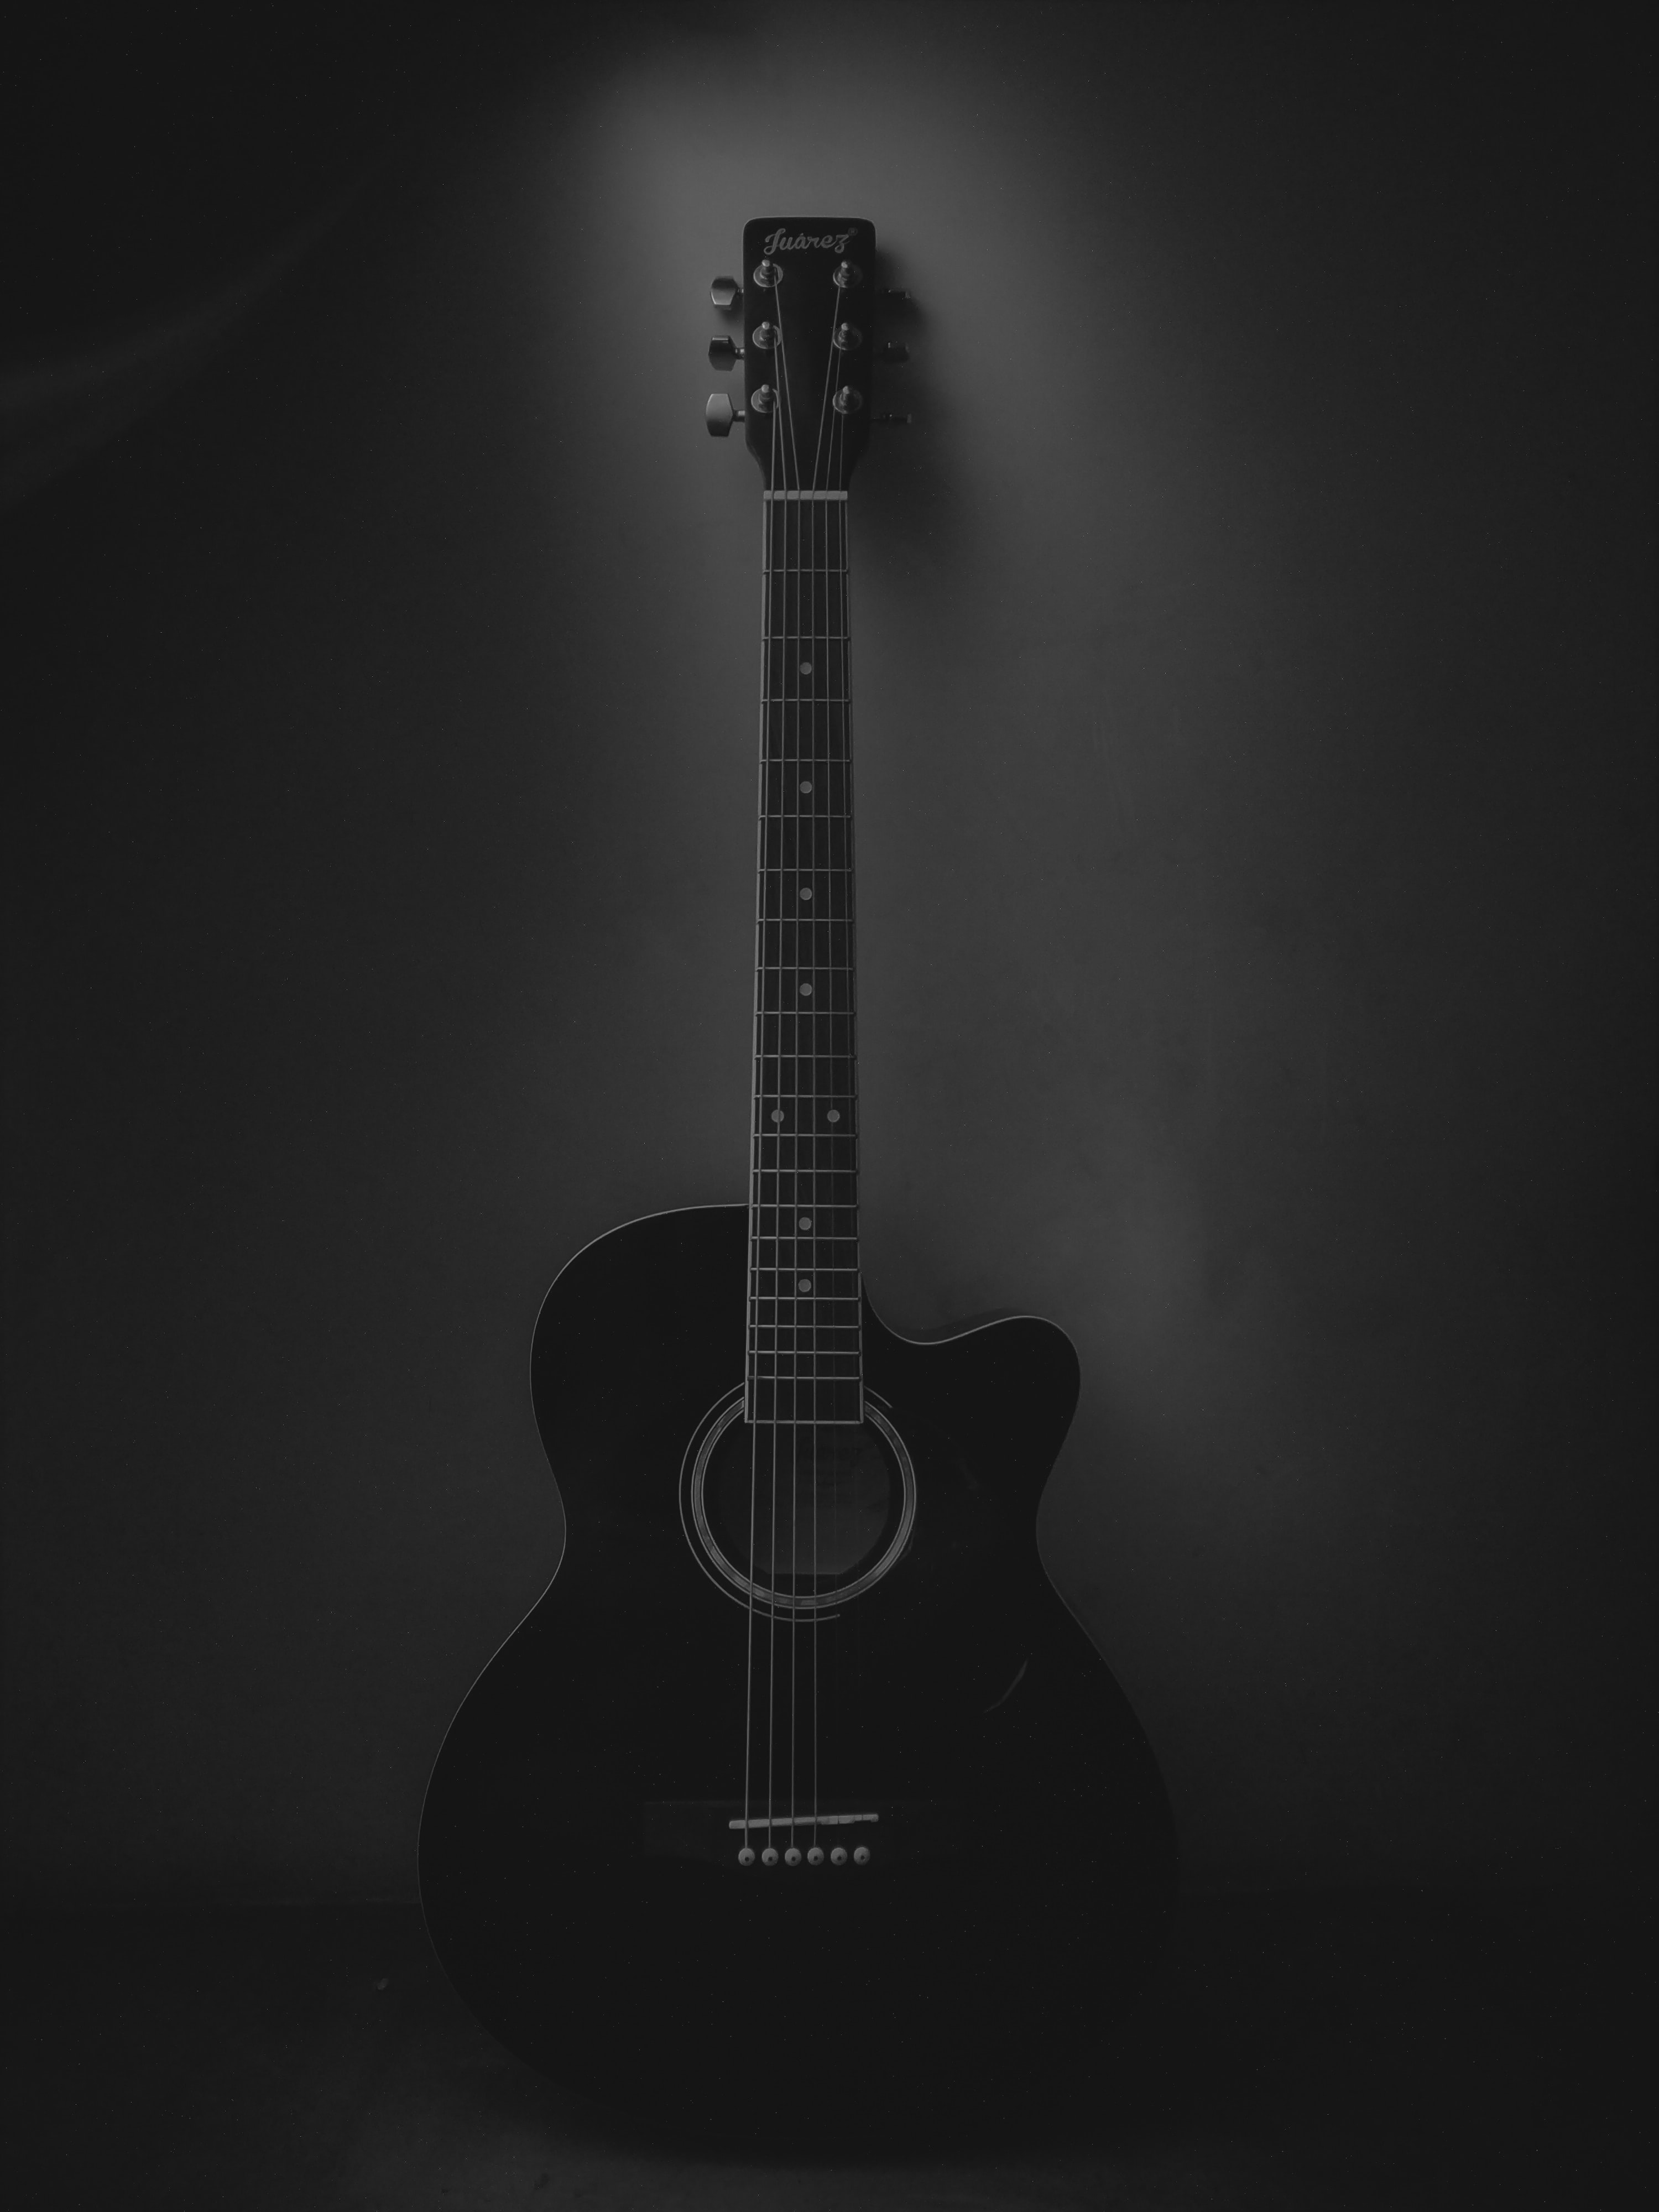 Popular Guitar Image for Phone